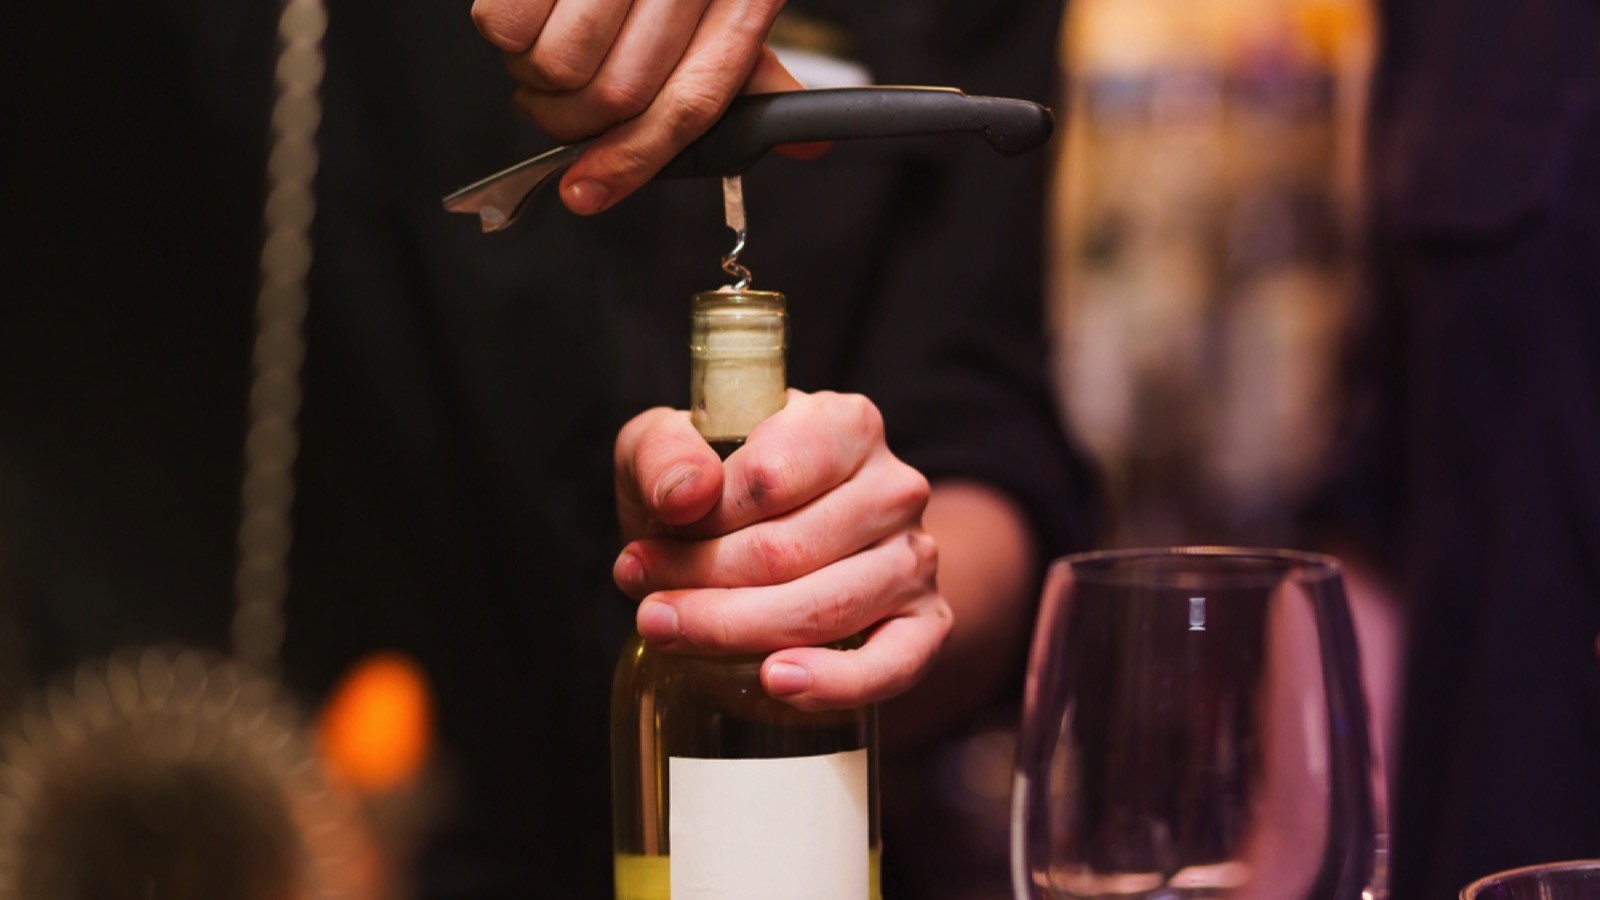 Opening wine bottle with wine opener